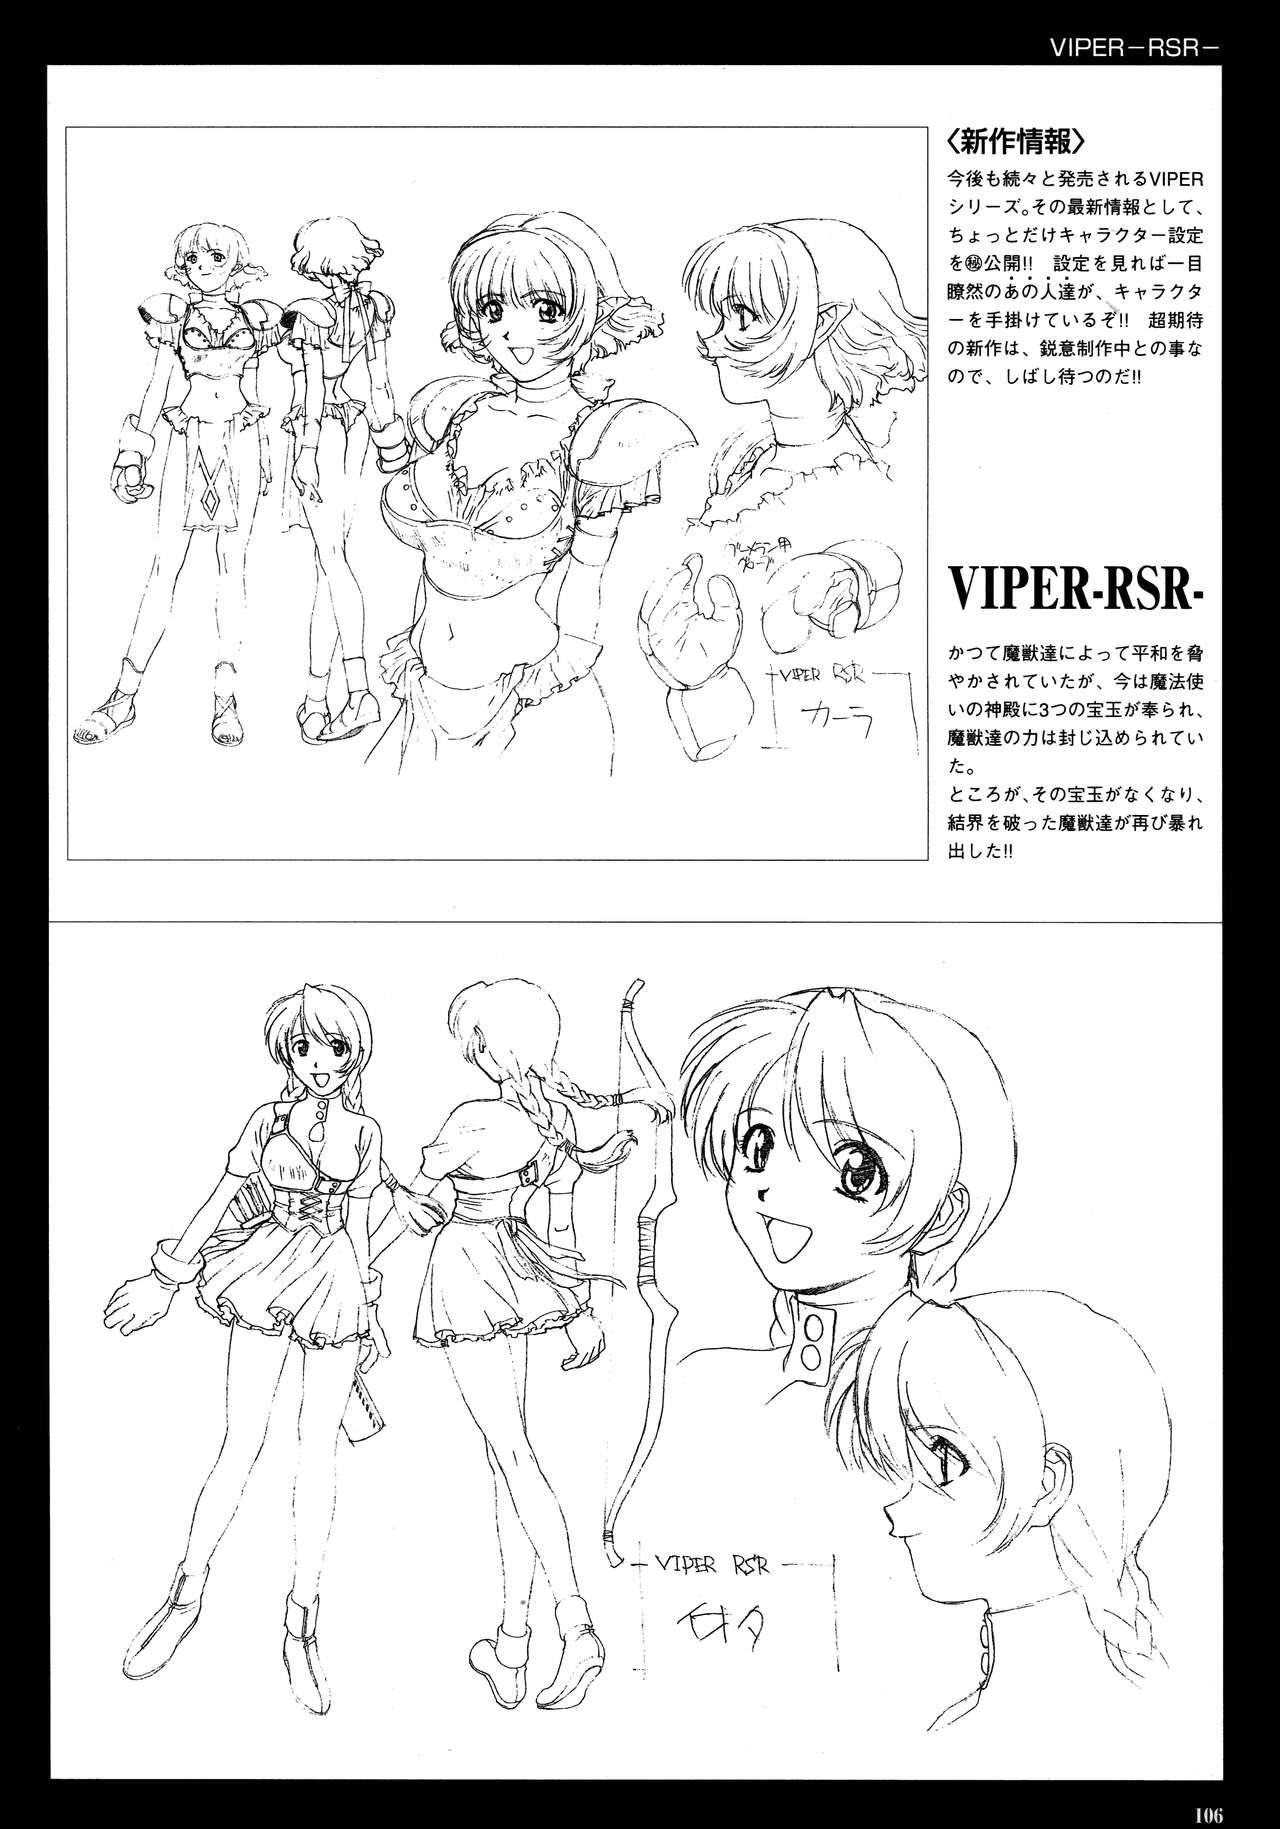 VIPER Series Official Artbook IV 107